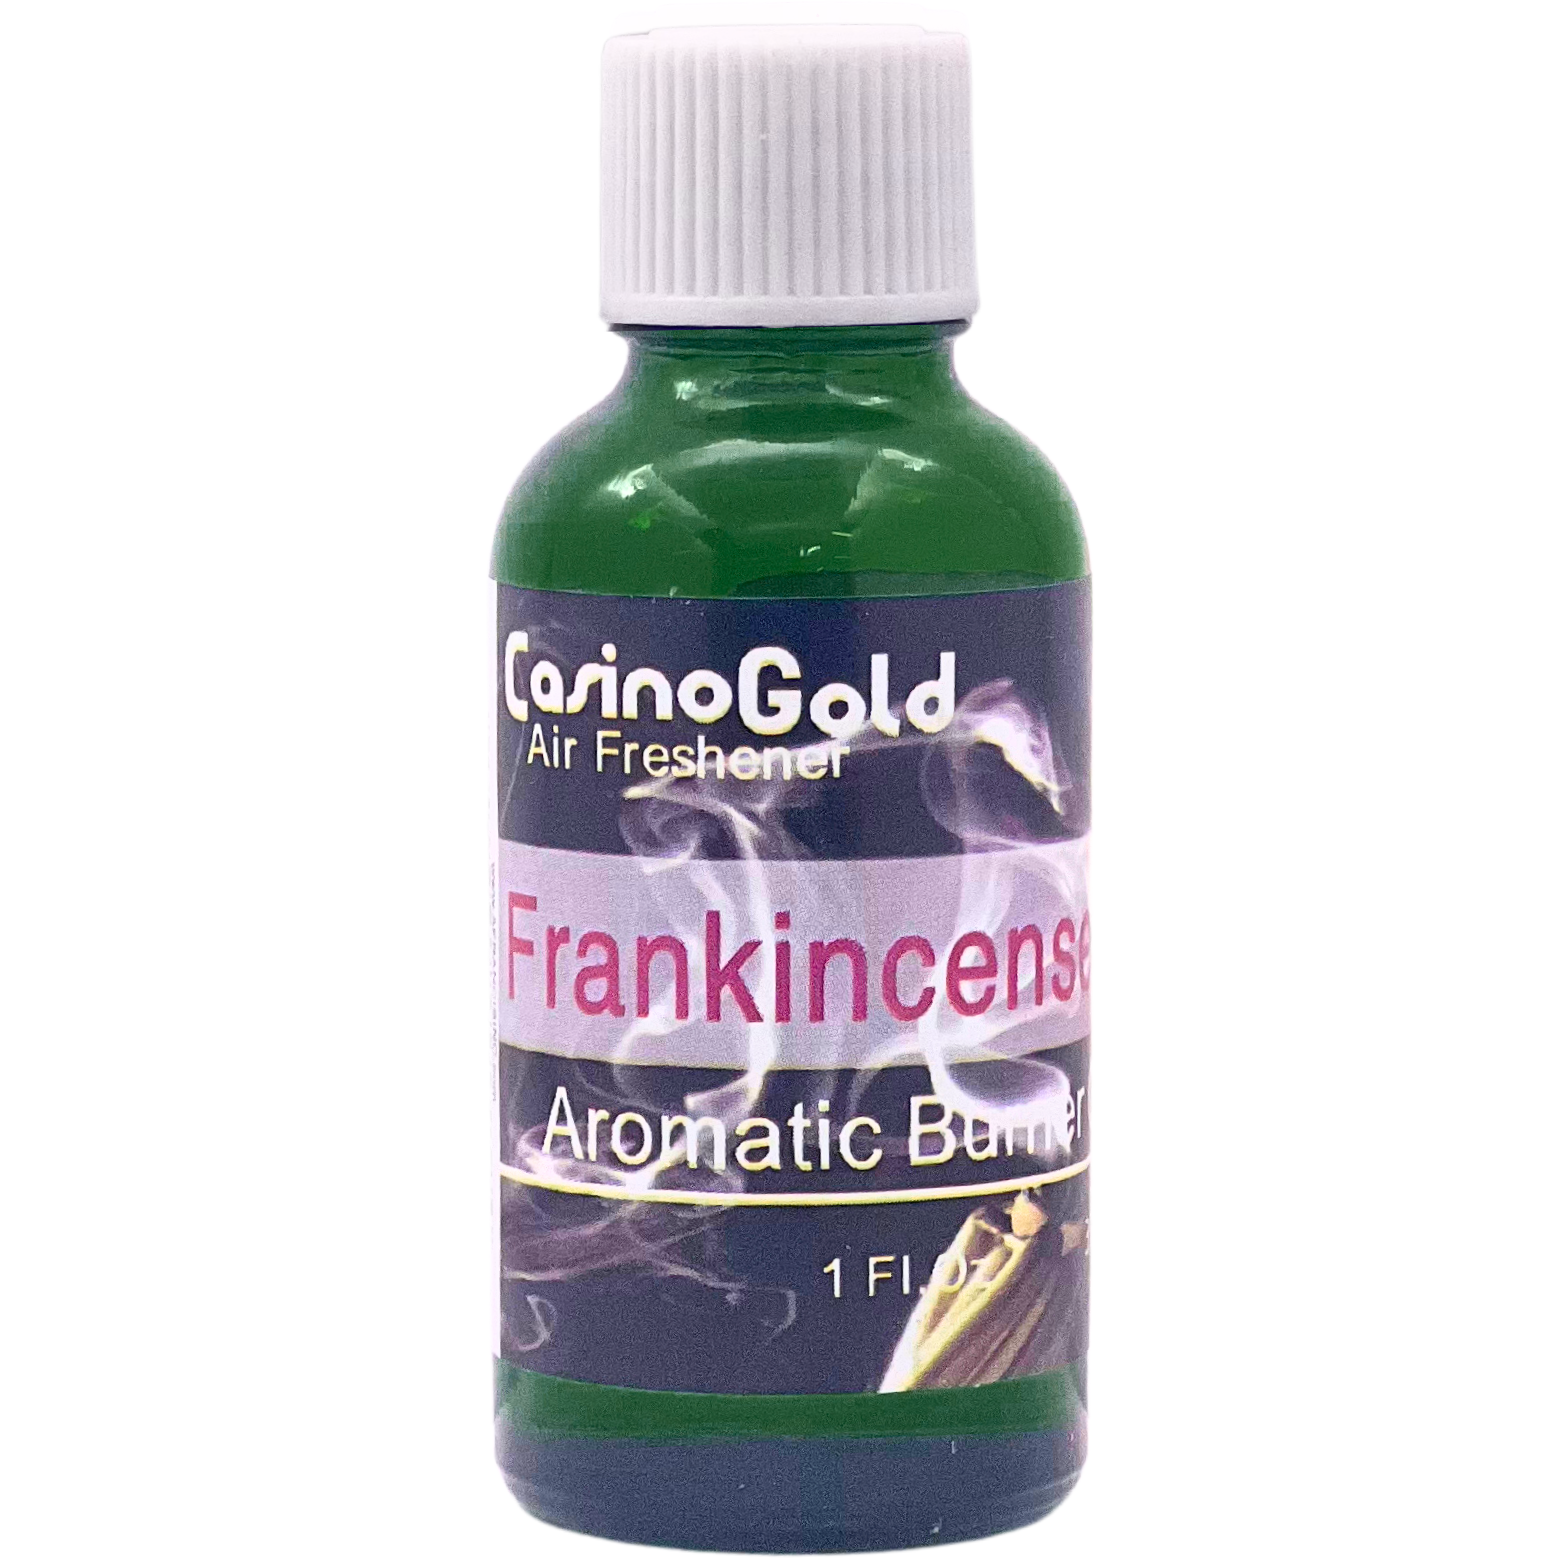 Casino Gold 1 Ounce Frankincense Fragrance Oil